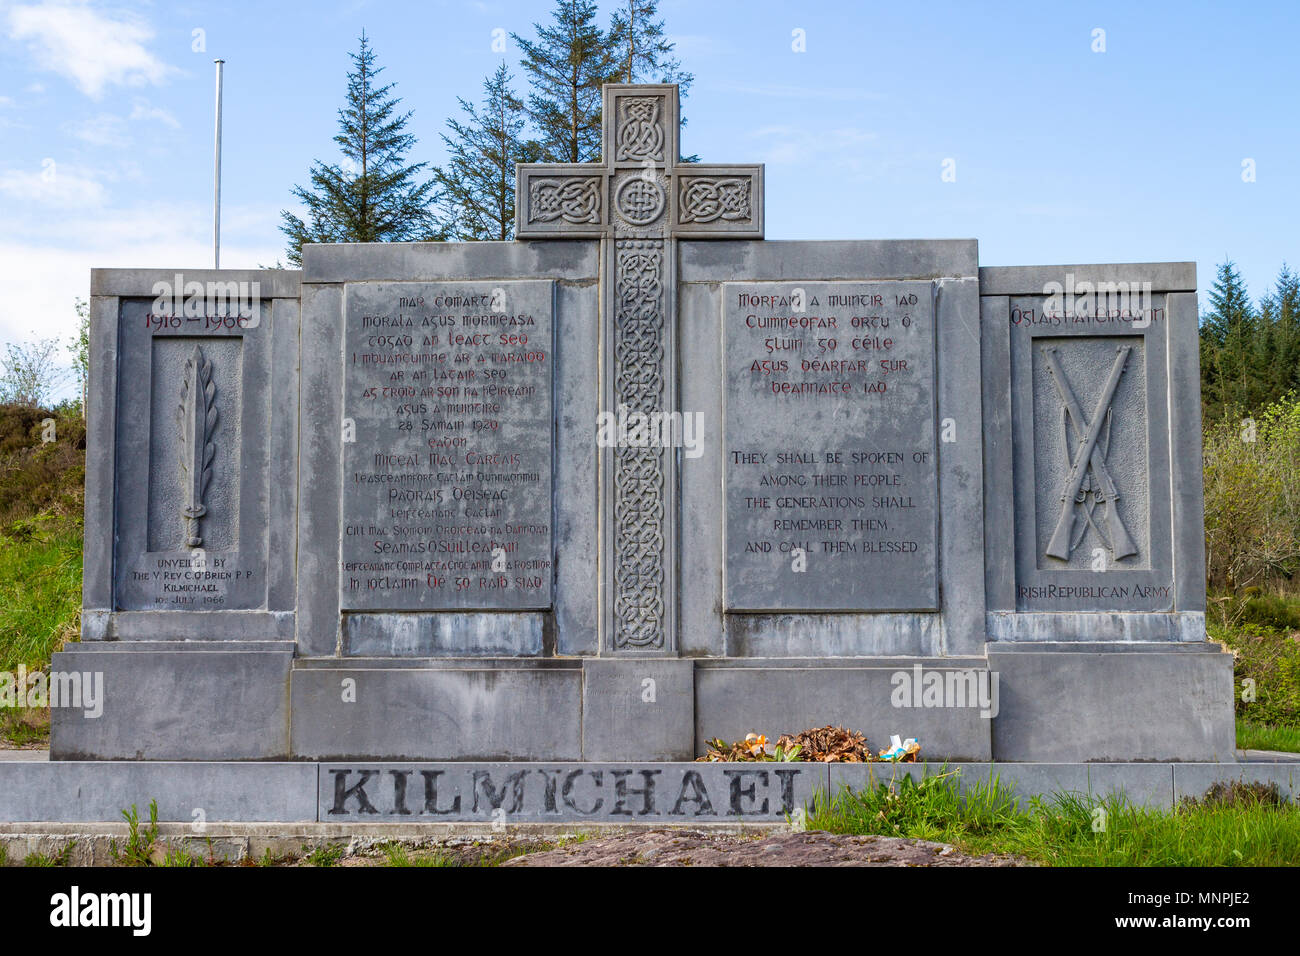 commemorative plaque near the village of kilmichael, ireland where the irish republican army or IRA ambushed the royal irish constabulary in 1920. Stock Photo